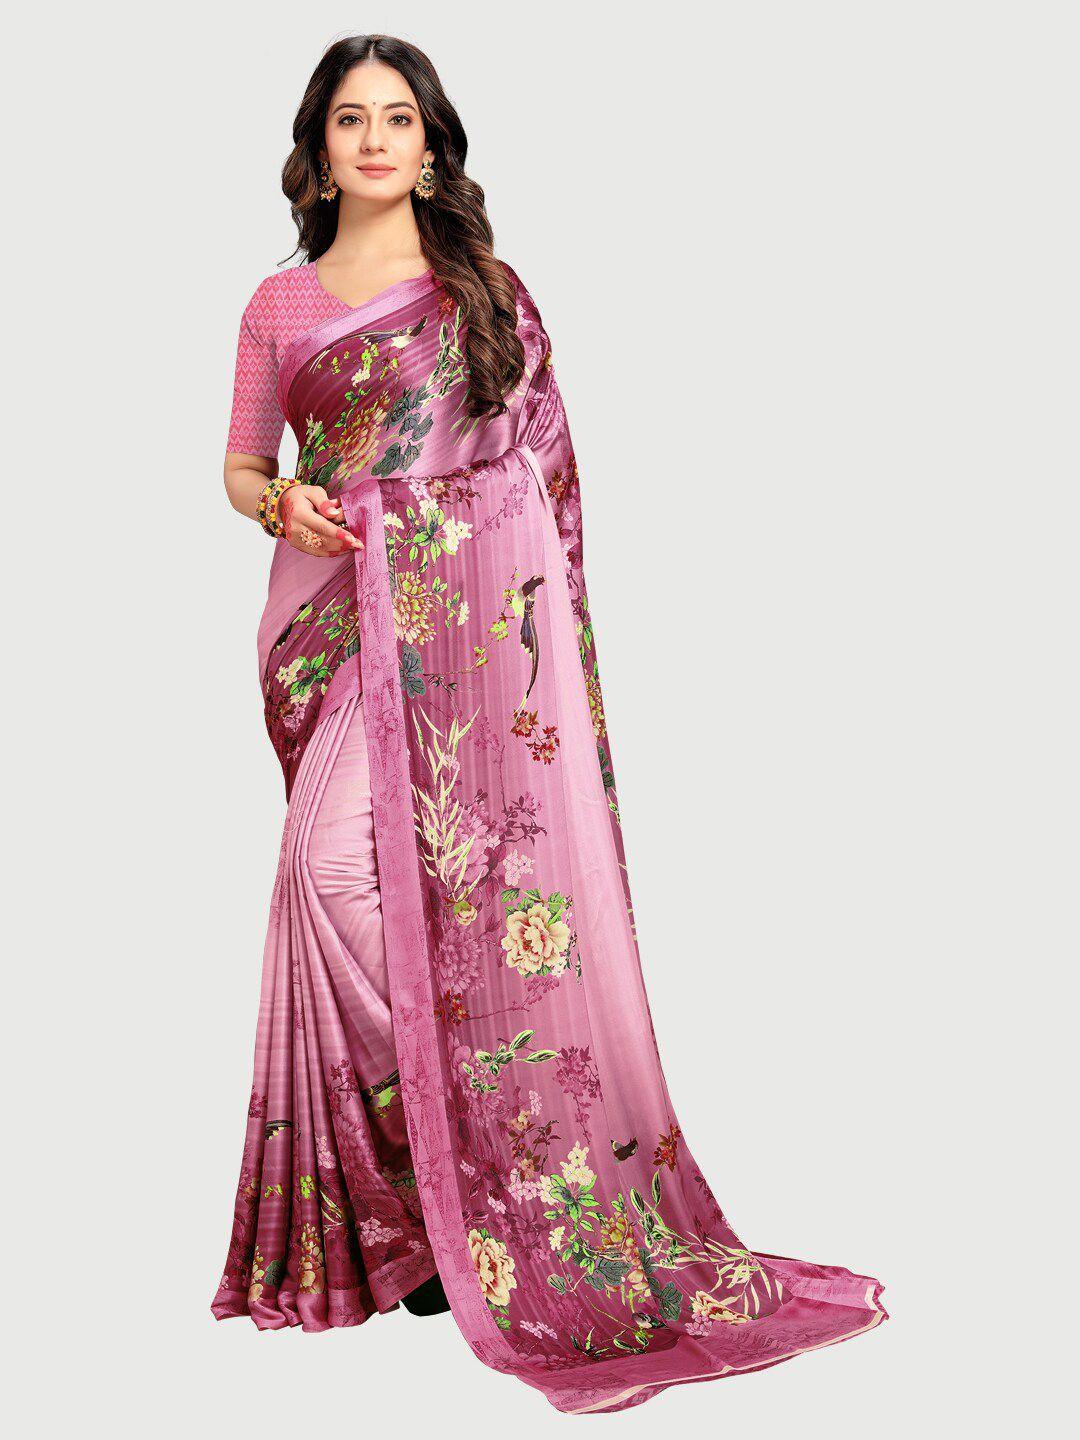 rekha maniyar pink & green floral satin saree